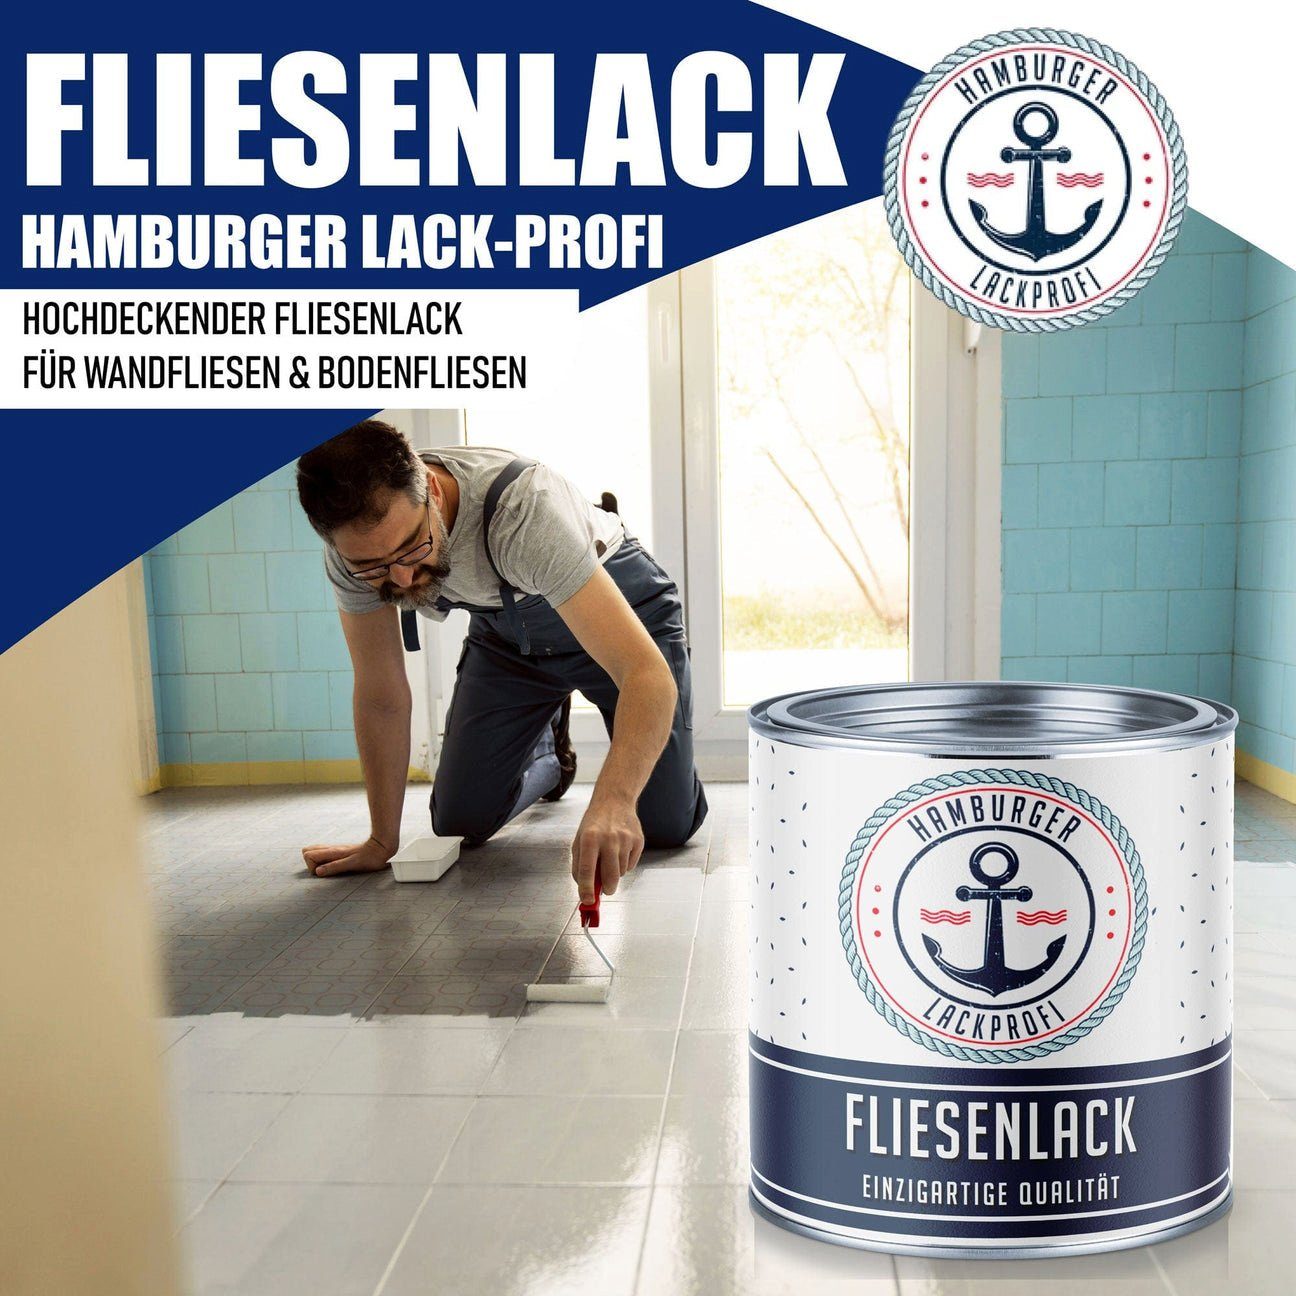 Lack-Profi Hamburger Fliesenlack